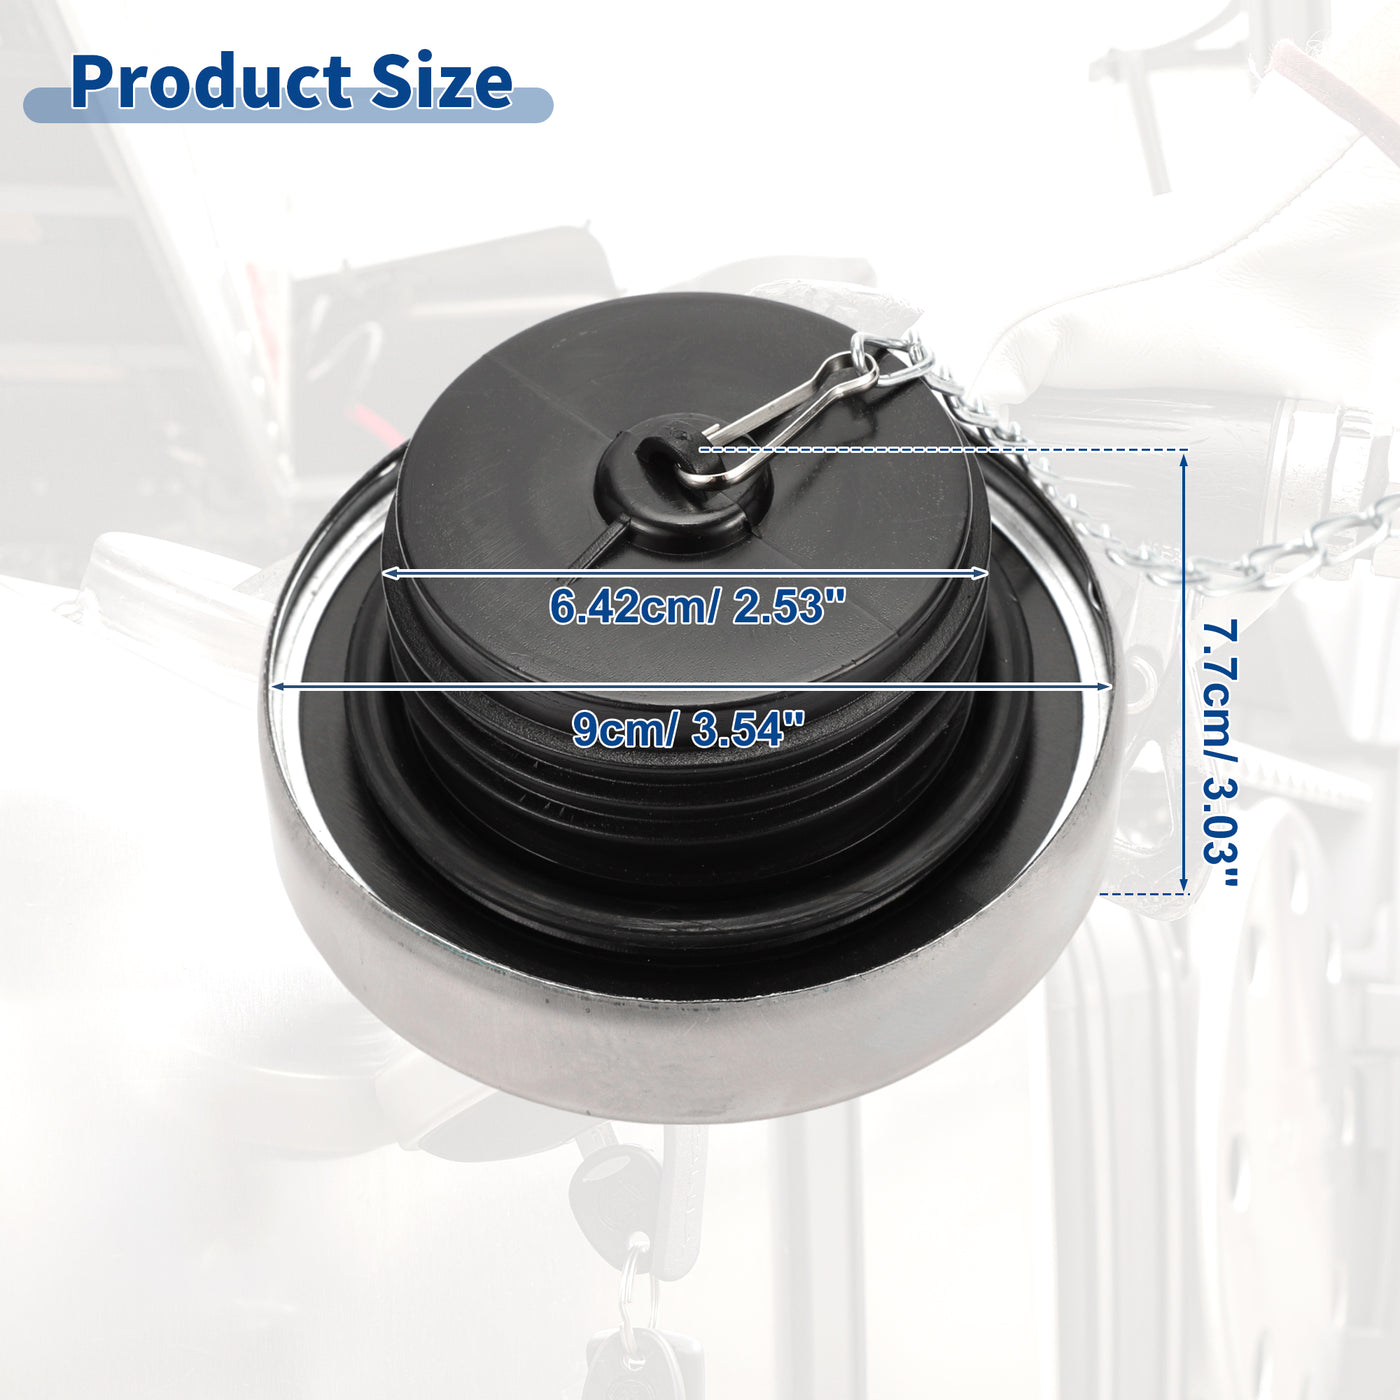 ACROPIX Plastic Locking Gas Cap Lock Fuel Tank Cap Black Fit for Iveco Eurocargo 1991-2015 with Keys No.2993923/1402004/1481301 - Pack of 3